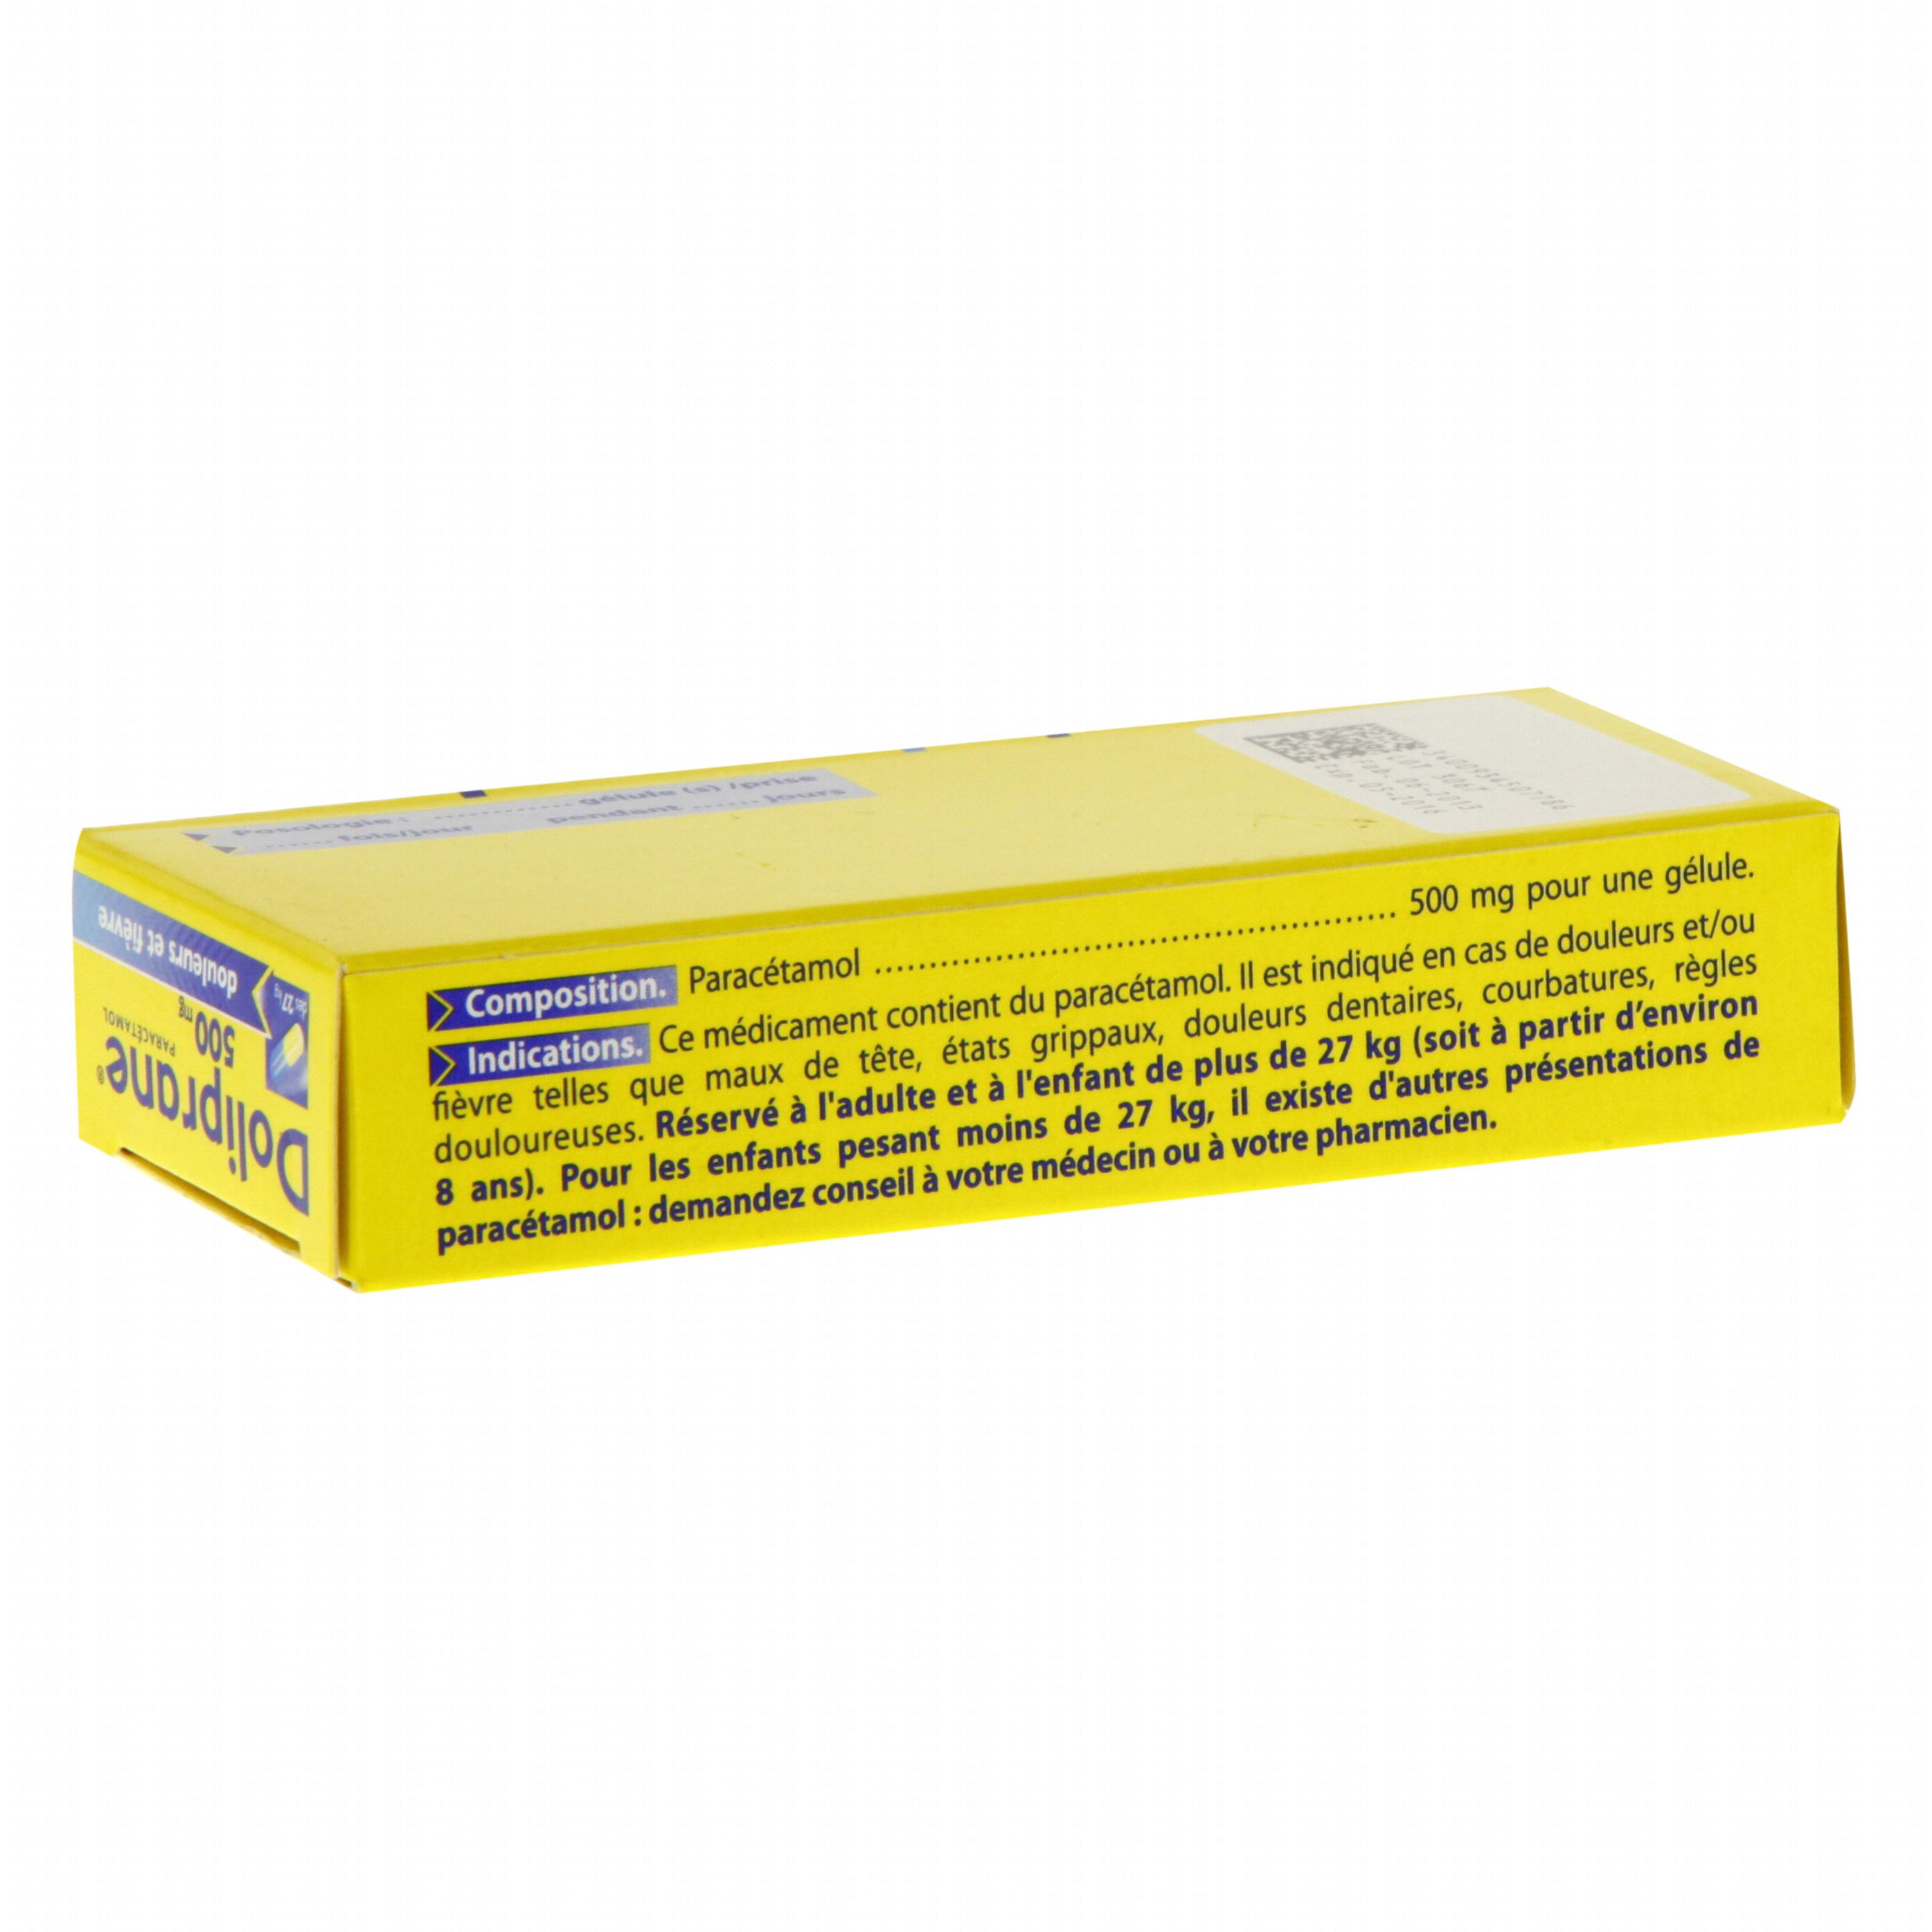 Doliprane 100 mg boîte de 10 suppositoires - Médicament conseil - Pharmacie  Prado Mermoz